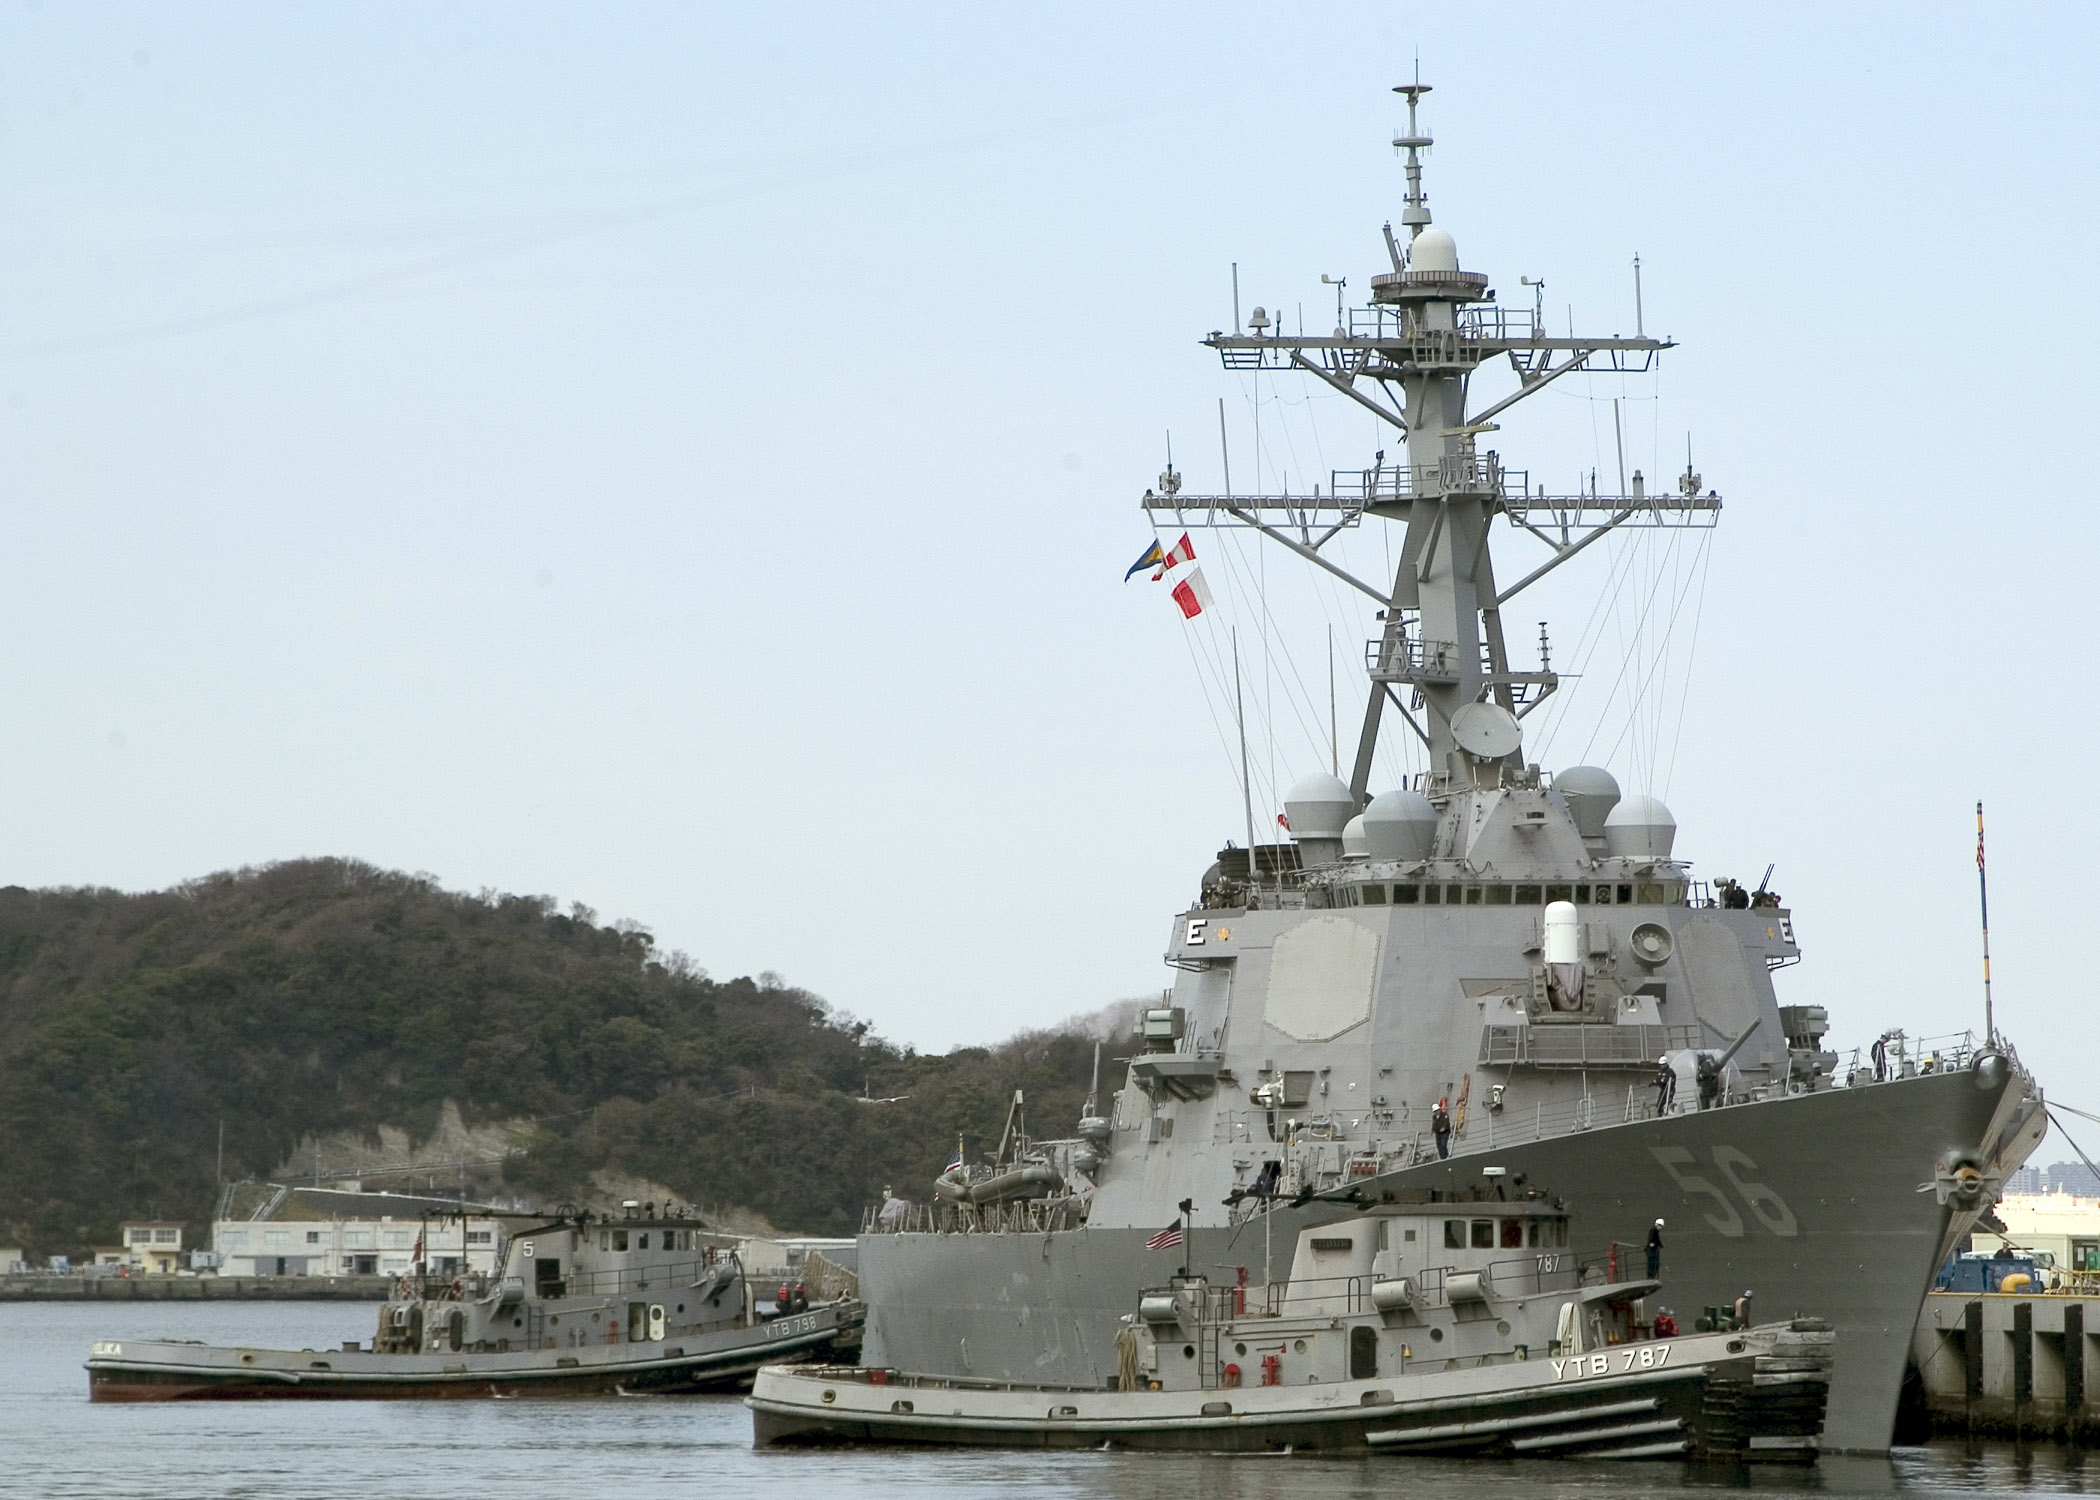 US_Navy_070319-N-0483B-001_Large_harbor_tugs_assist_Arleigh_Burke-class_guided_missile_destroyer_USS_John_S._McCain_(DDG_56)_as_she_departs_Commander_Fleet_Activities_Yokosuka.jpg